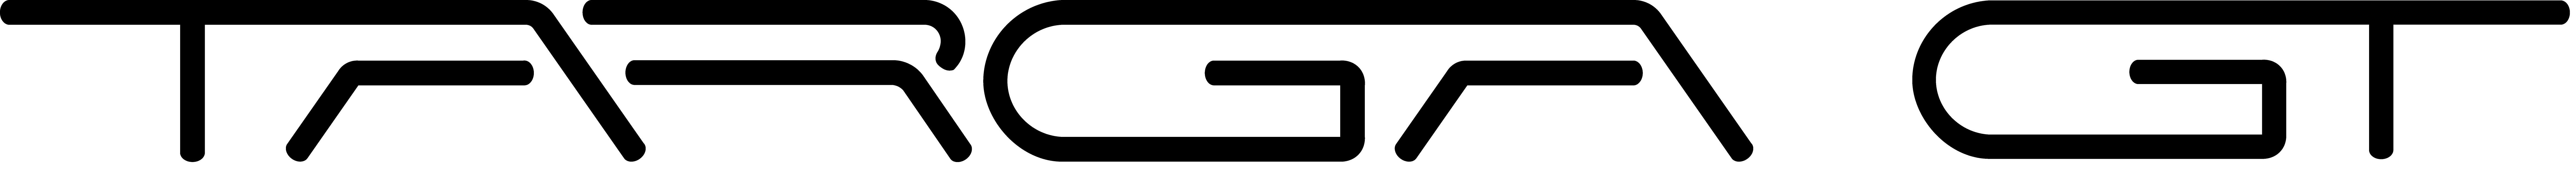 Targa GT - product logo